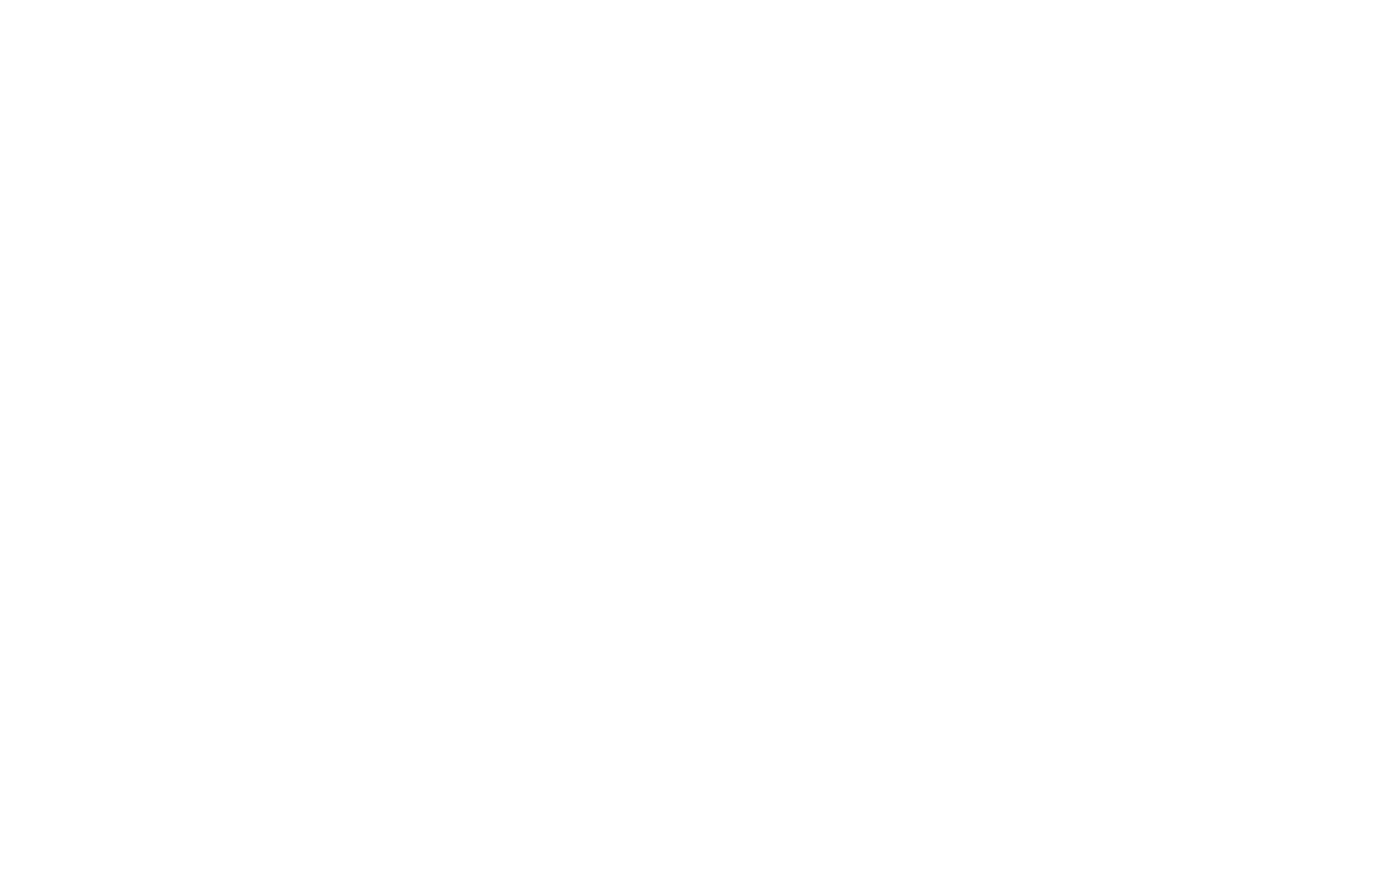 Eastern Sports Management